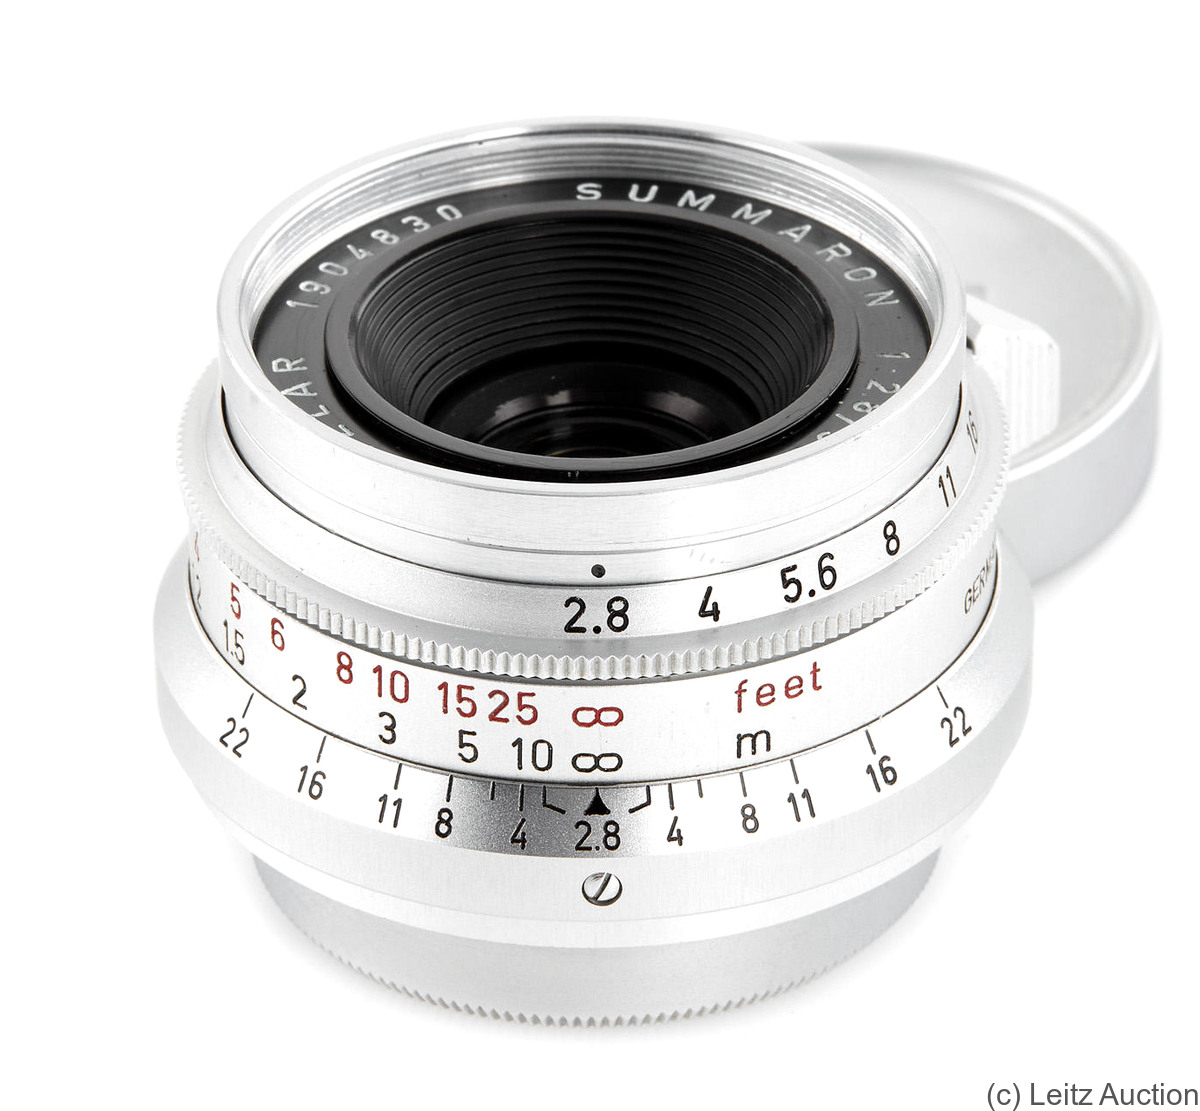 Leitz: 35mm (3.5cm) f2.8 Summaron (SM) camera